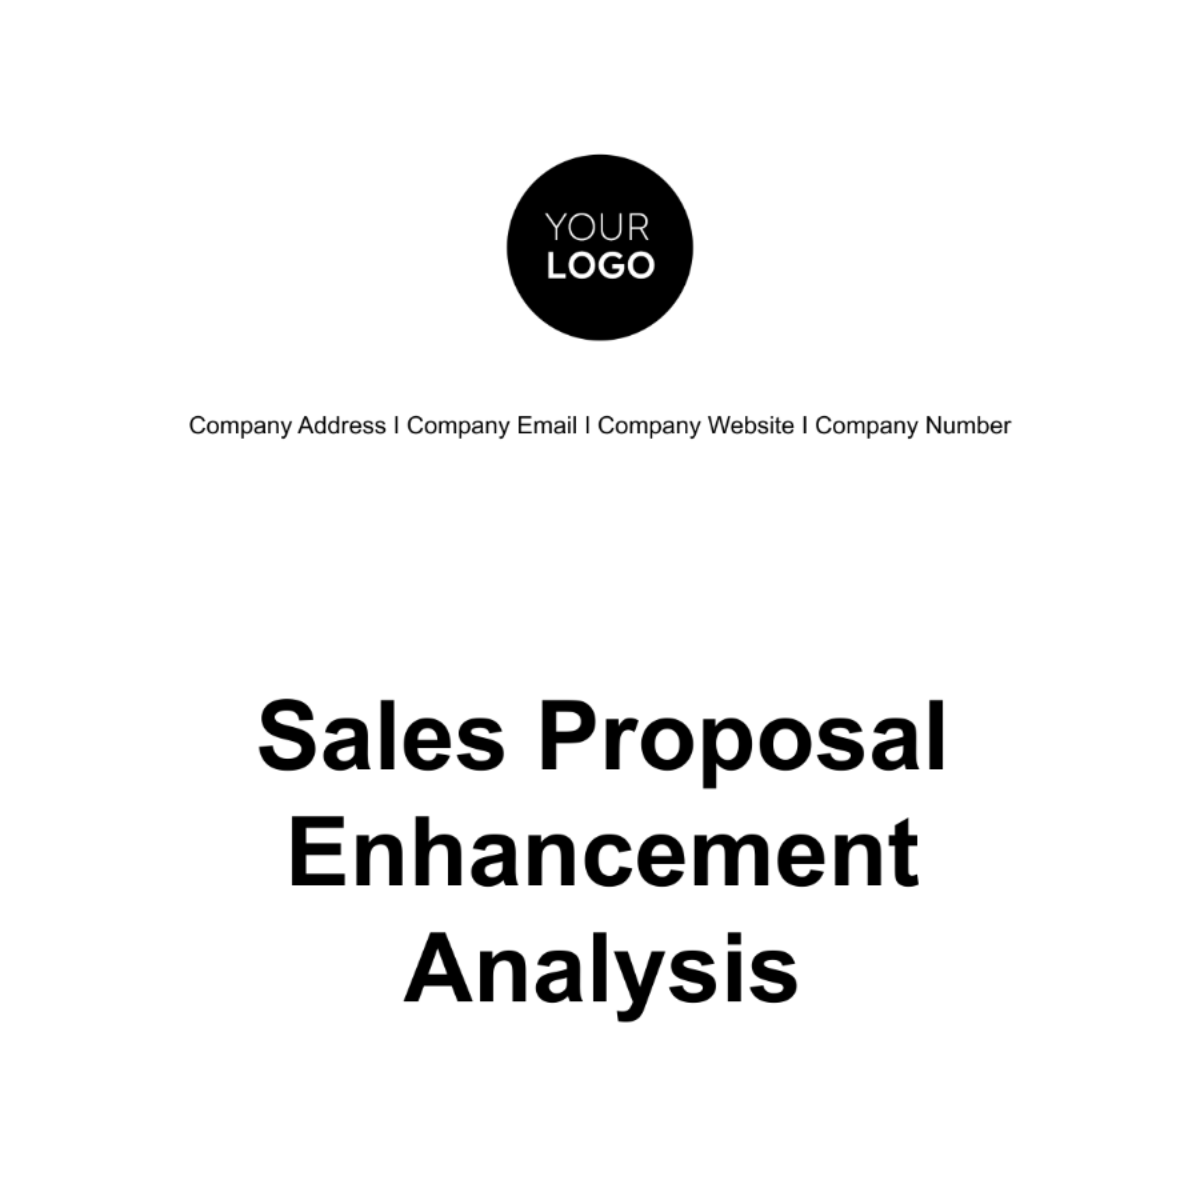 Sales Proposal Enhancement Analysis Template